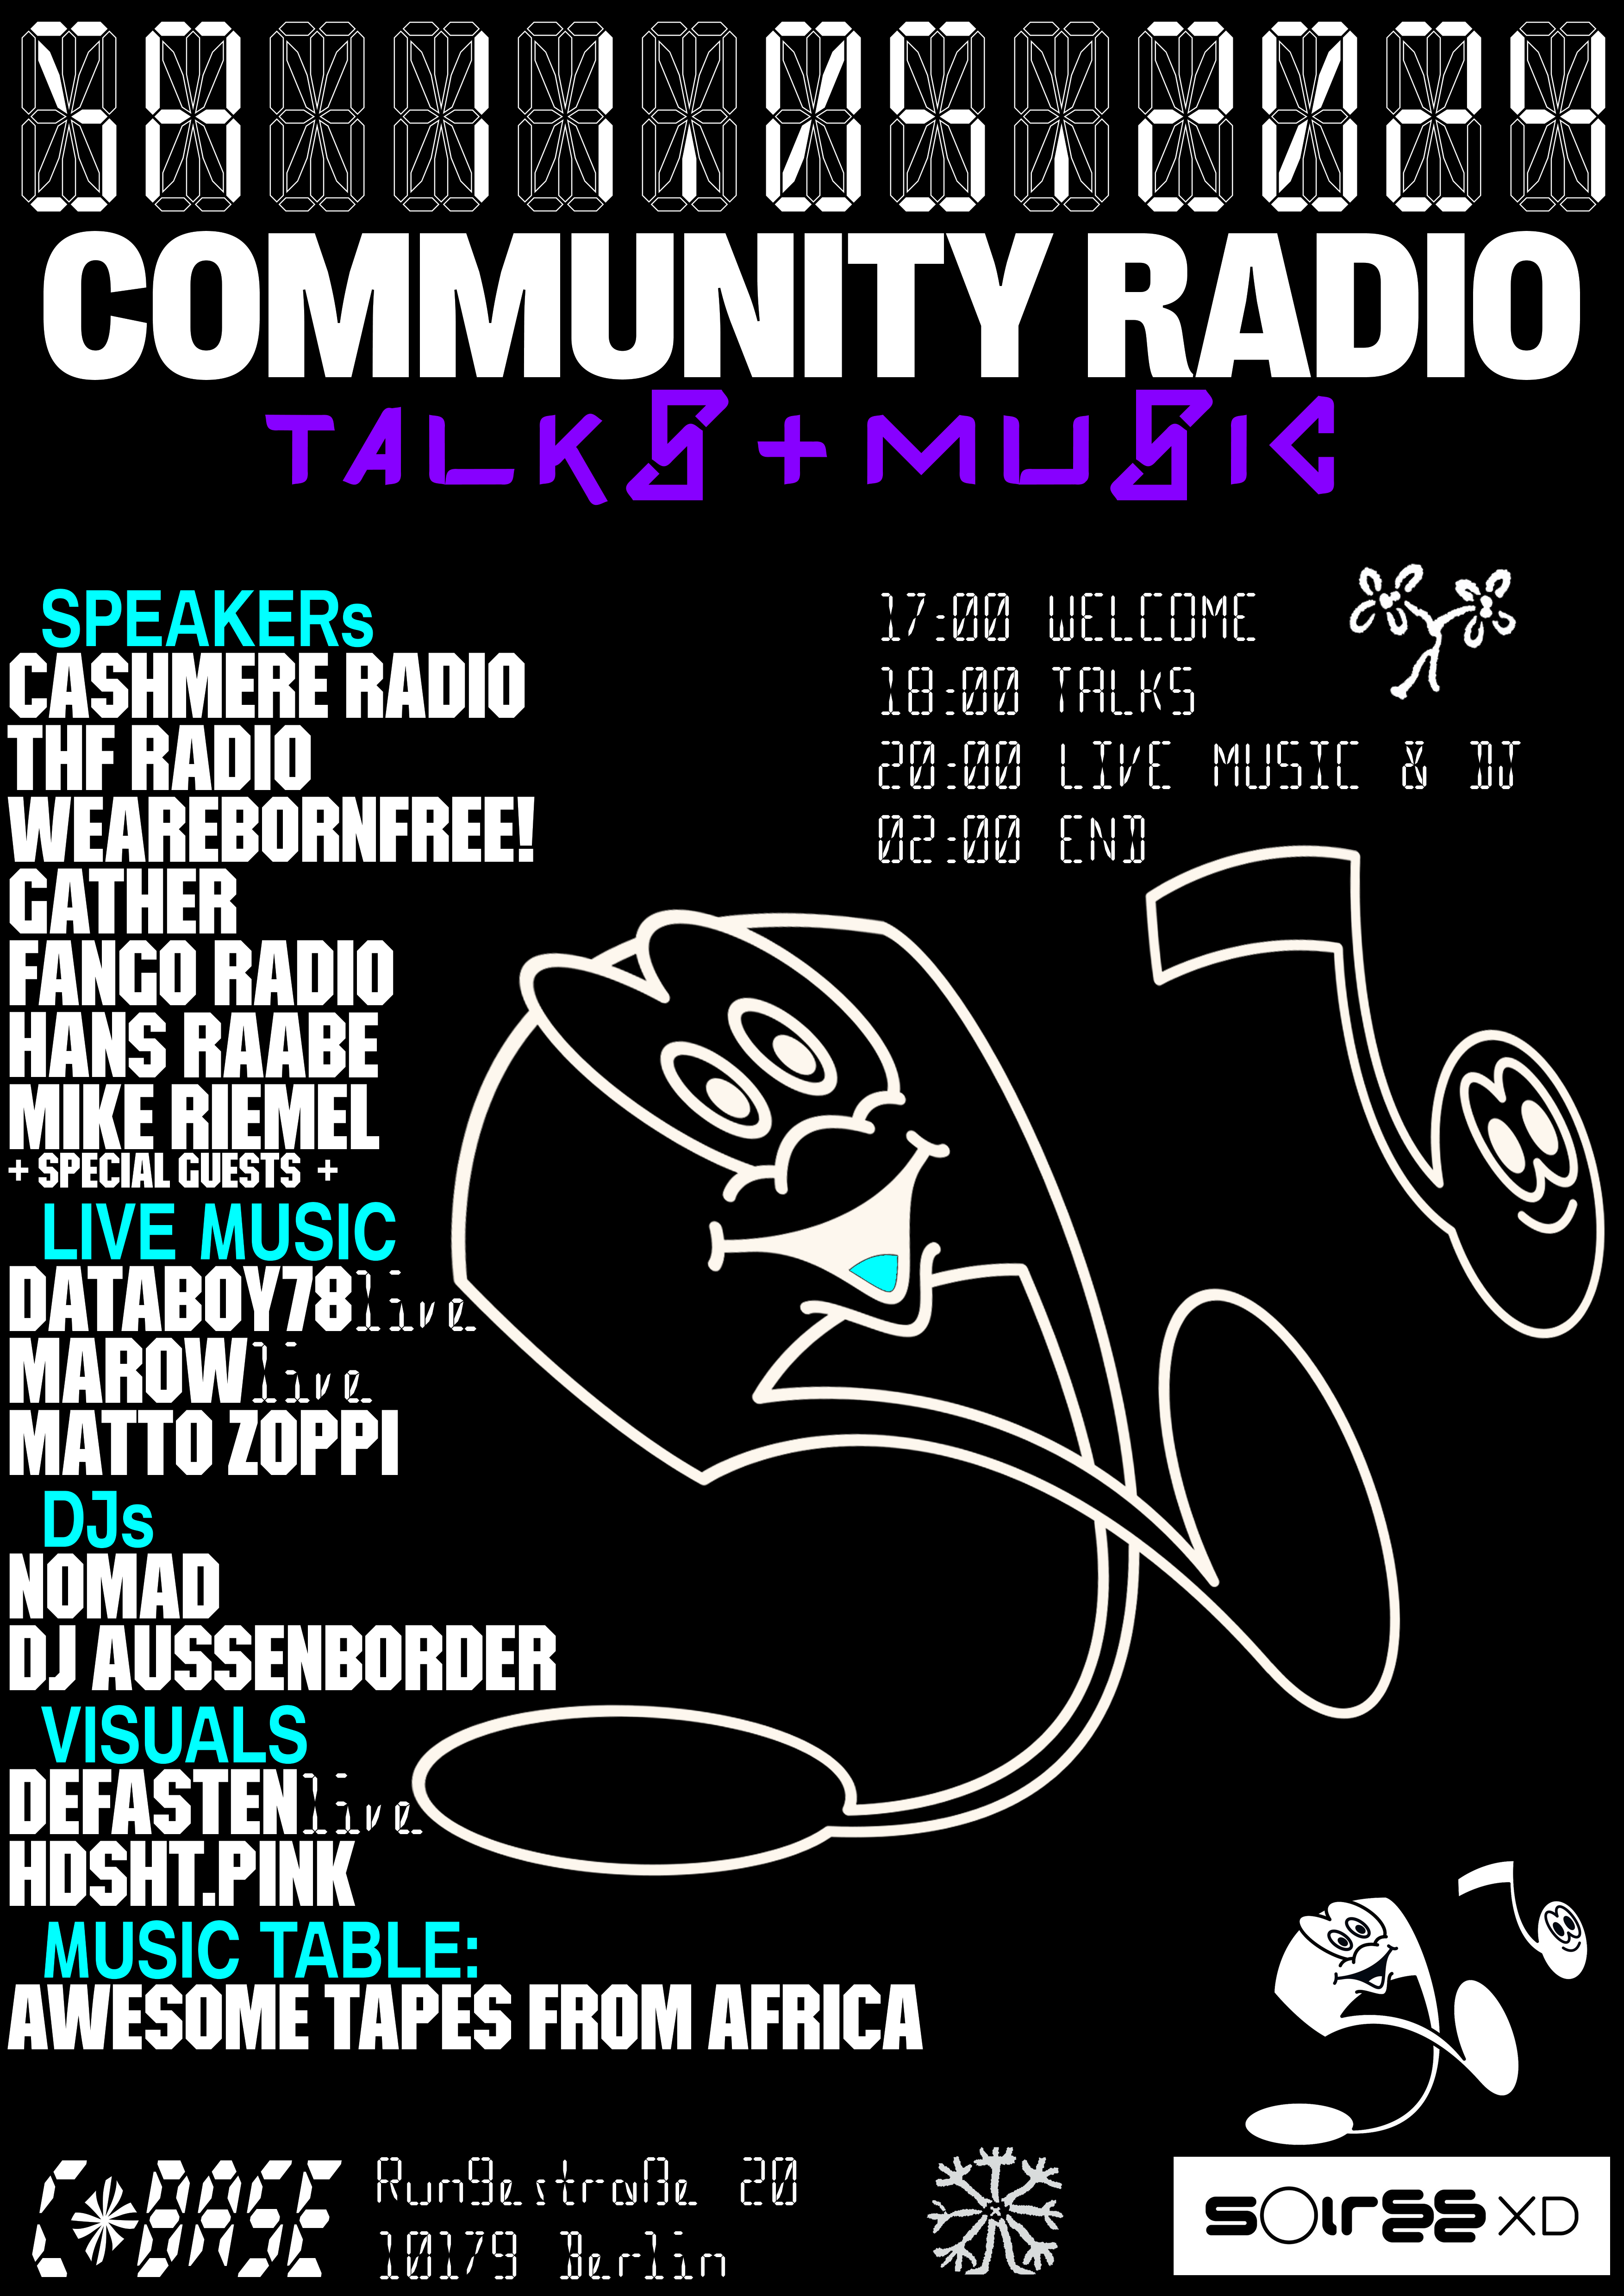 Community Radio on May 11th